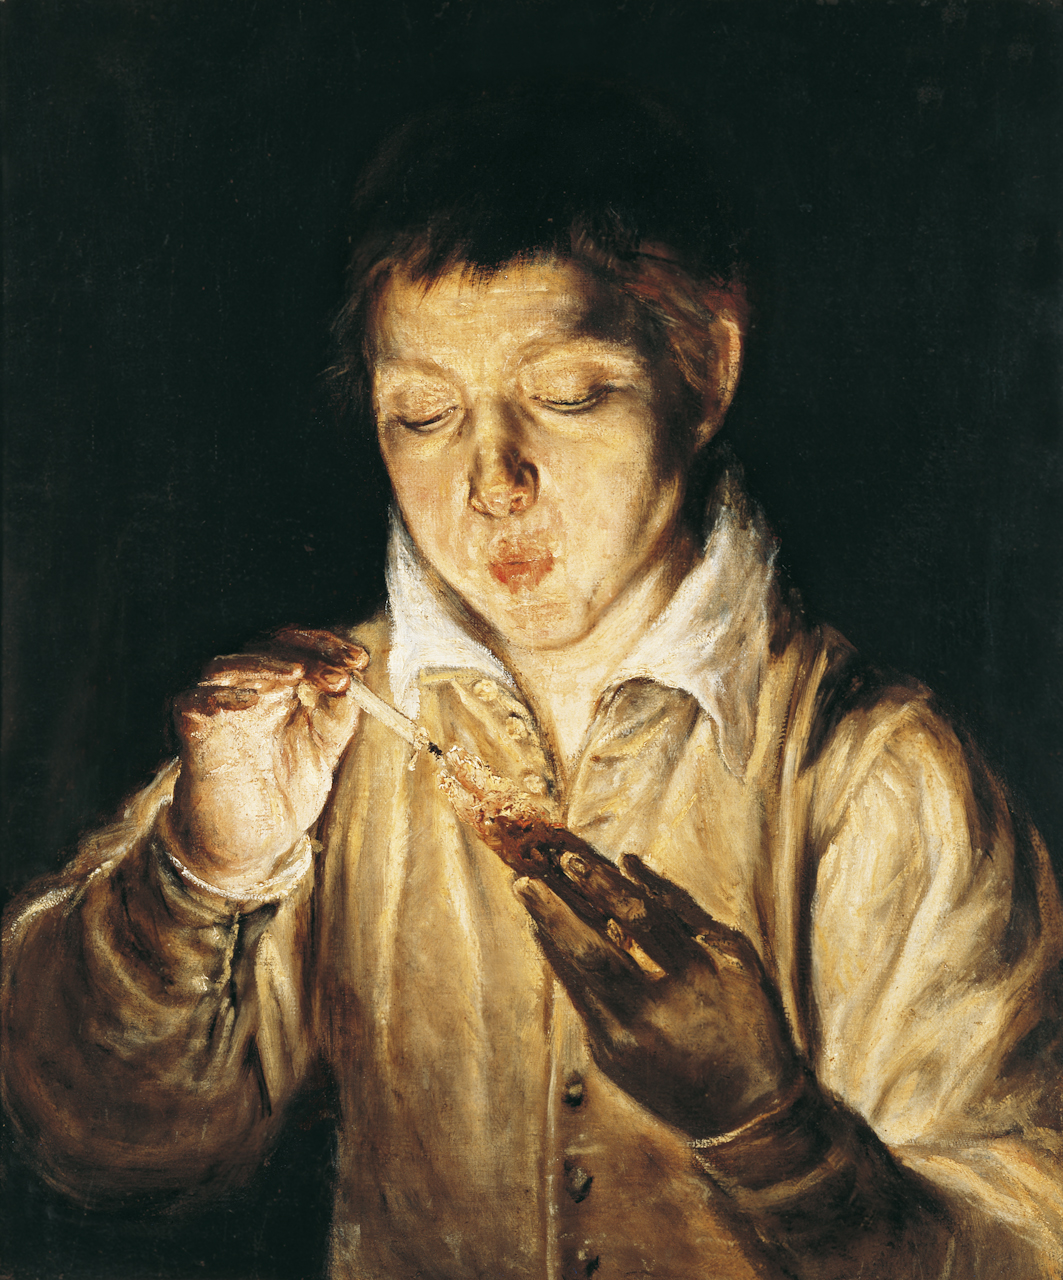 El soplon, ragazzo che accende una candela con un tizzone (dipinto) di Theotokopoulos Domenikos detto El Greco (terzo quarto sec. XVI)